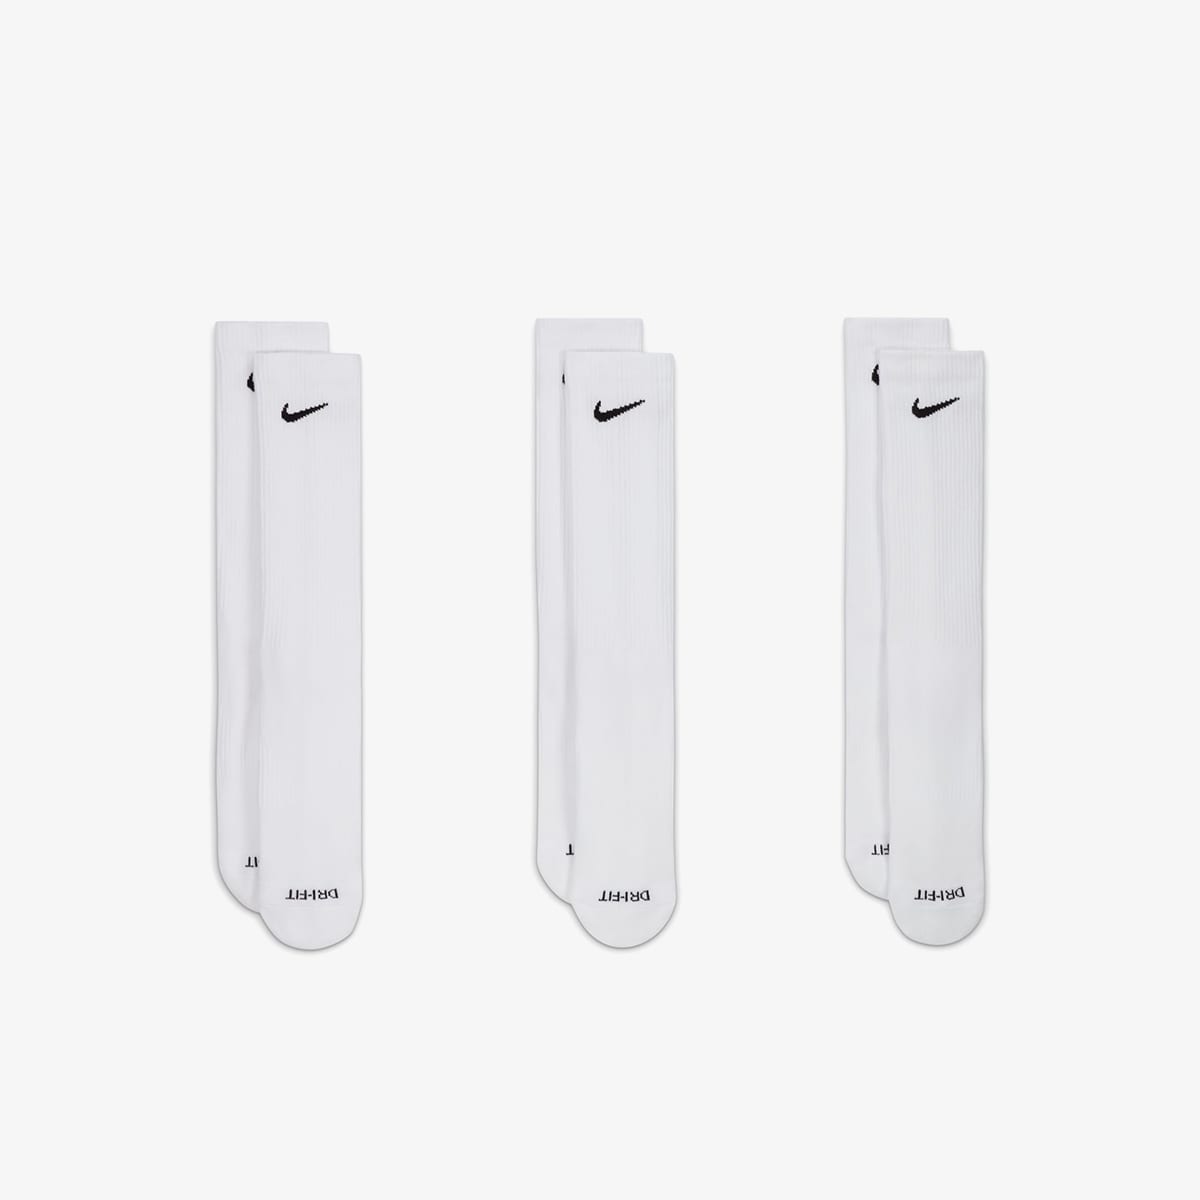 Nike x Stussy Socks (White & Black) | END. Launches